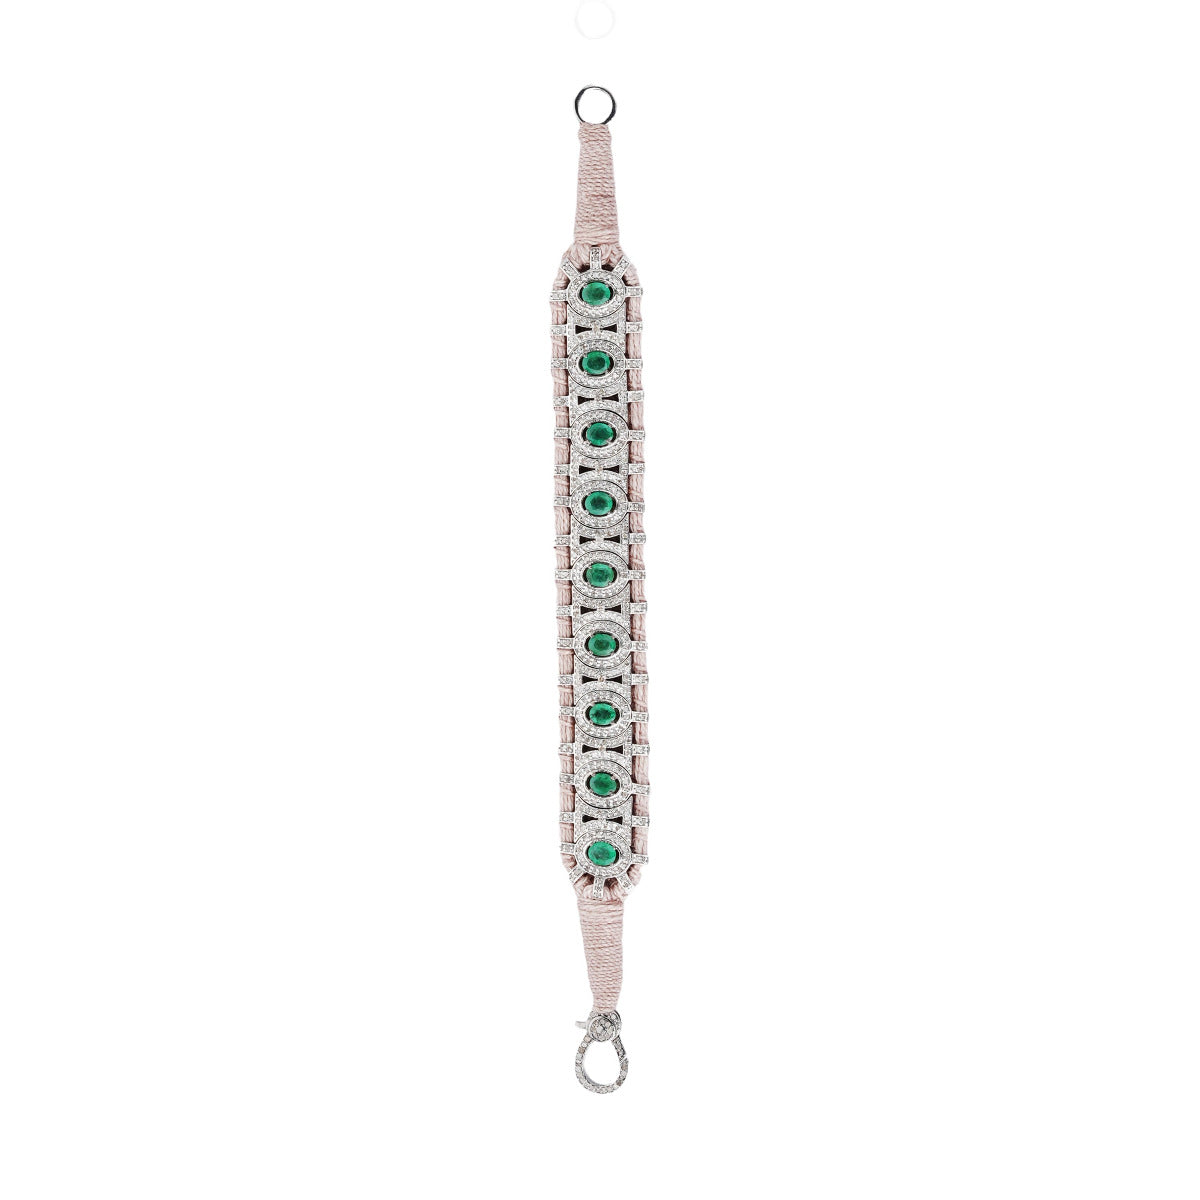 Sao Paulo Vanilla and Emeralds bracelet in 925 silver and diamonds